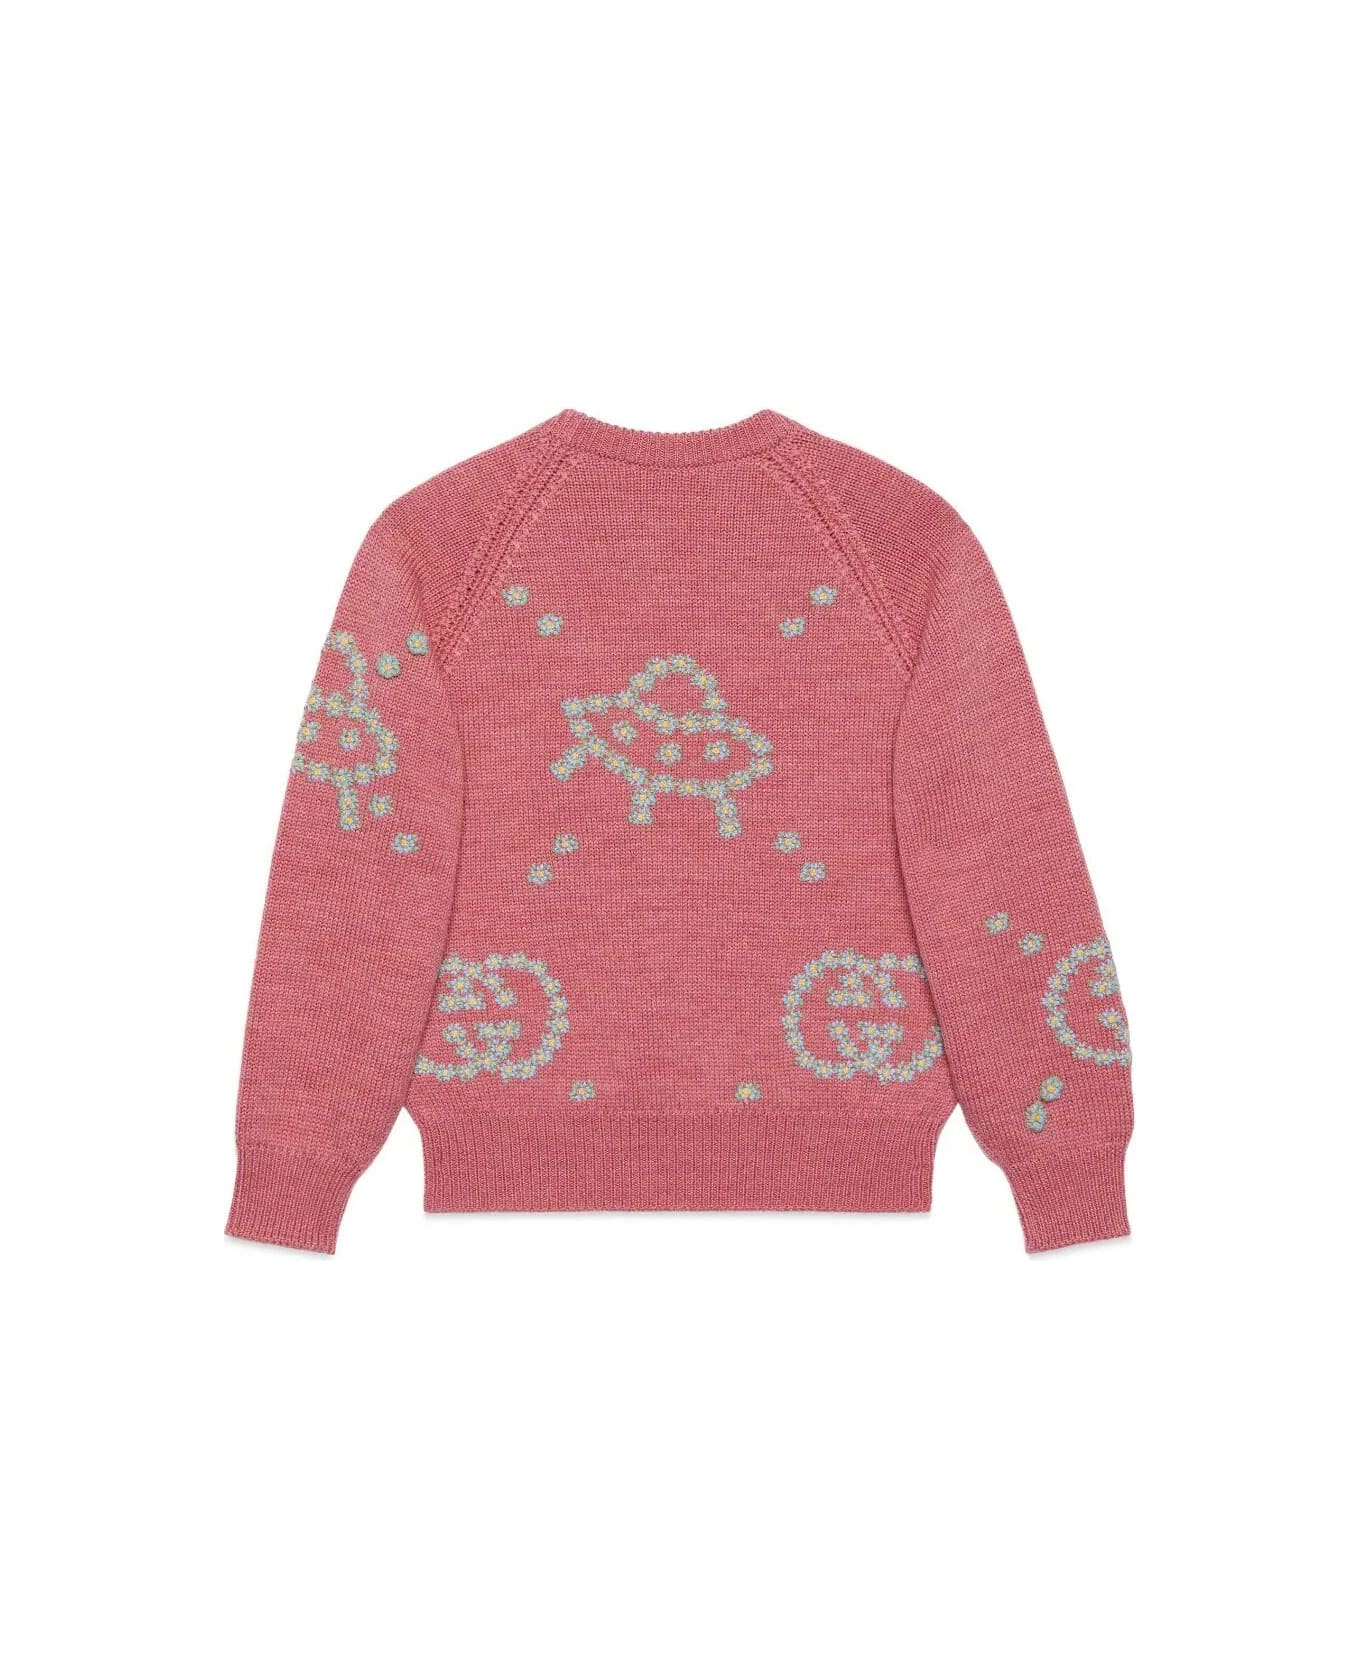 Gucci Crew Neck Sweater - Dark Rose Mix ニットウェア＆スウェットシャツ